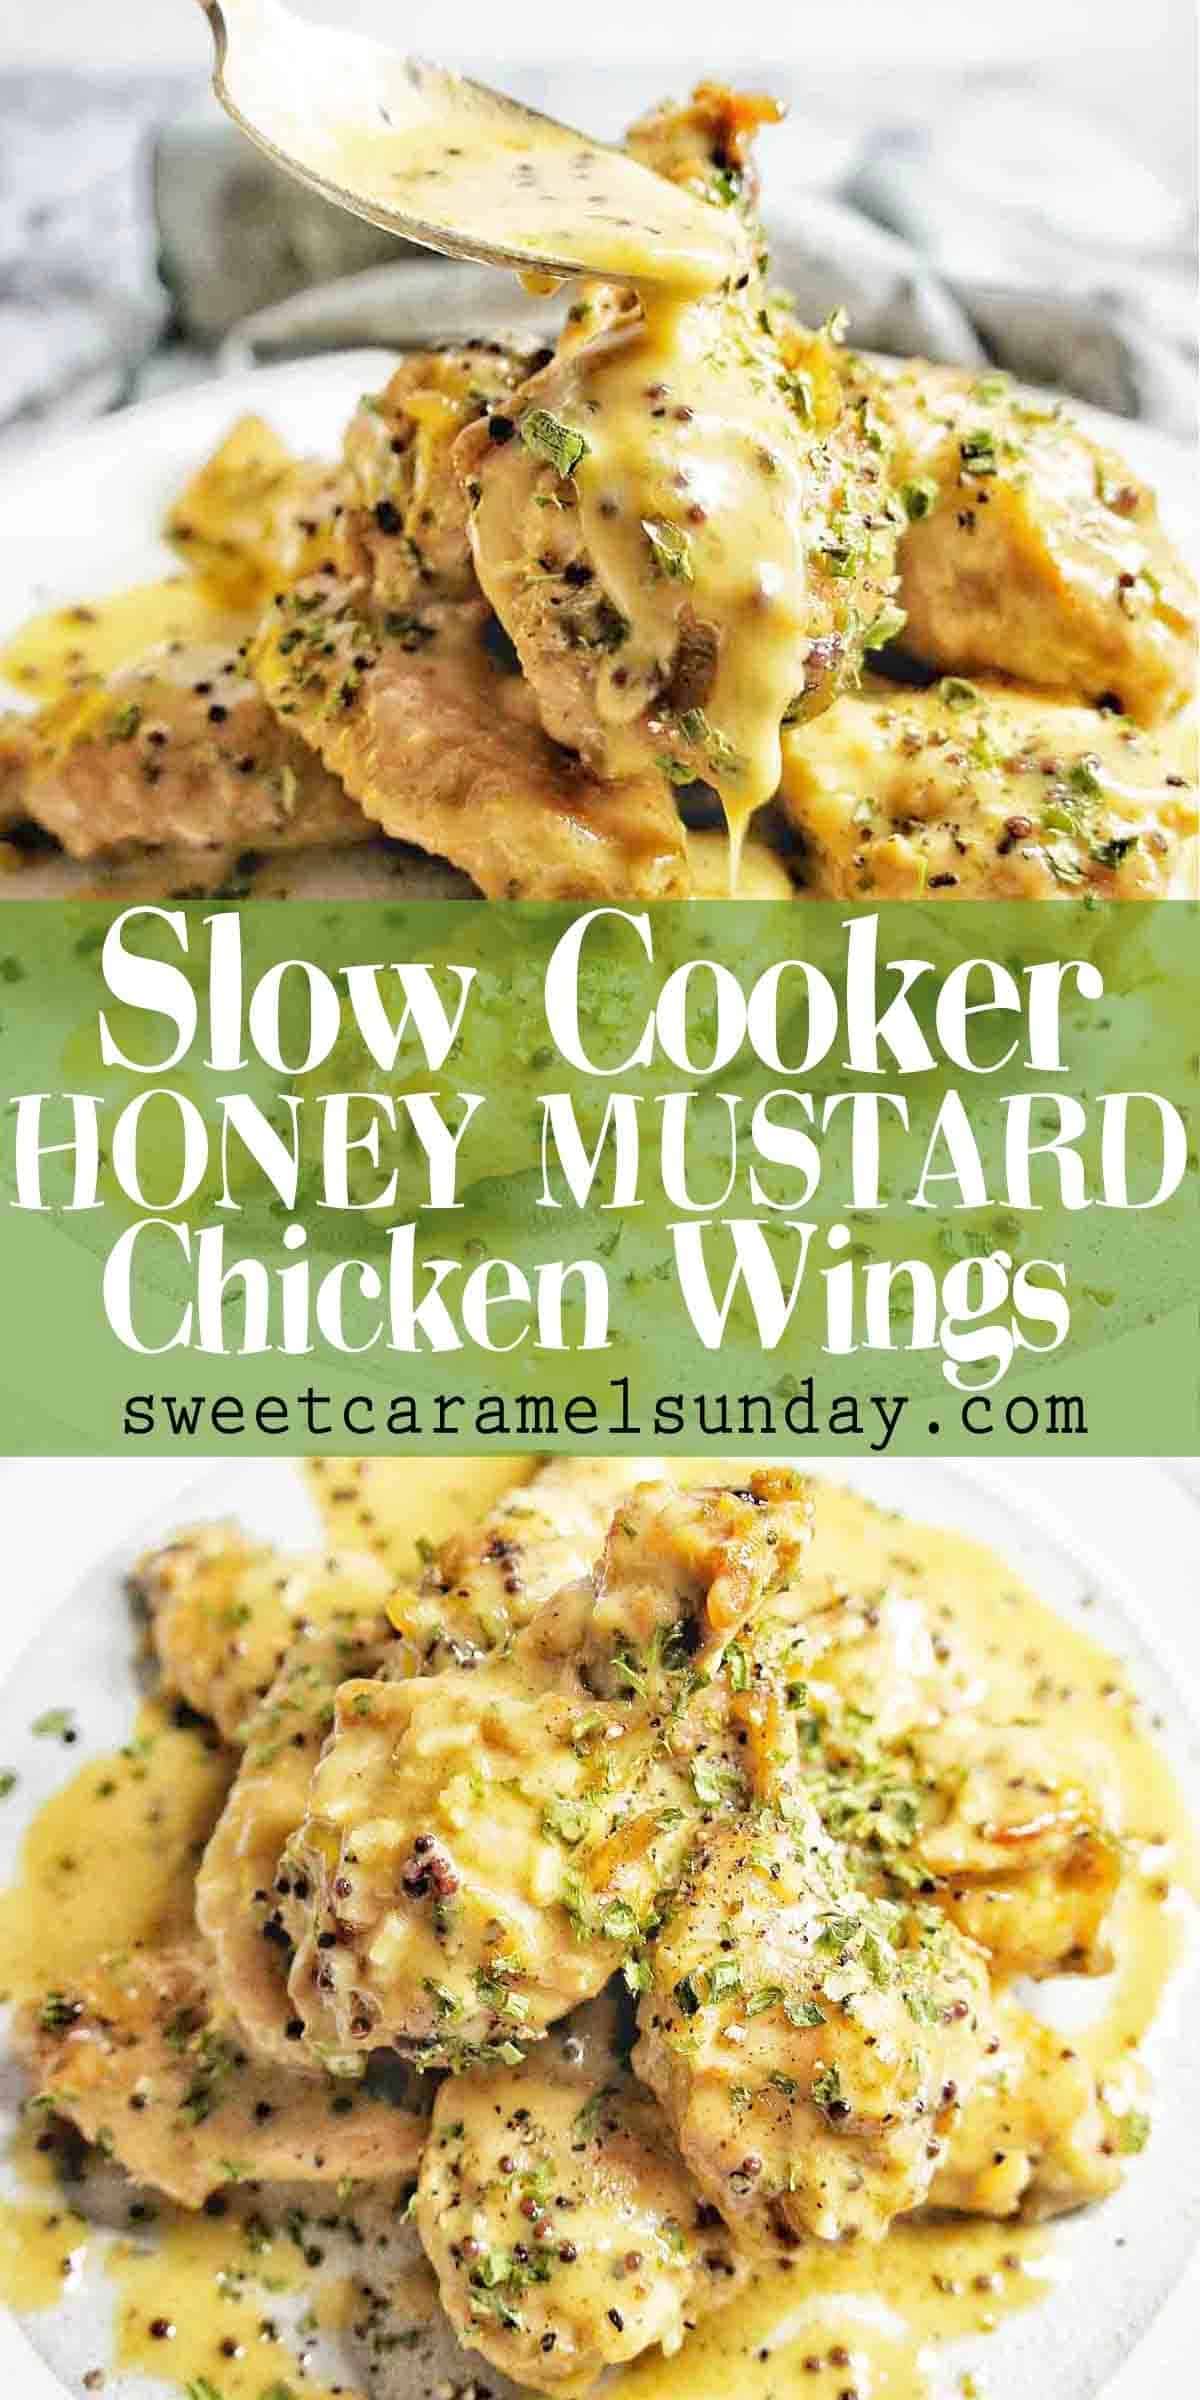 Honey Mustard Chicken Wings (Slow Cooker) - Sweet Caramel Sunday